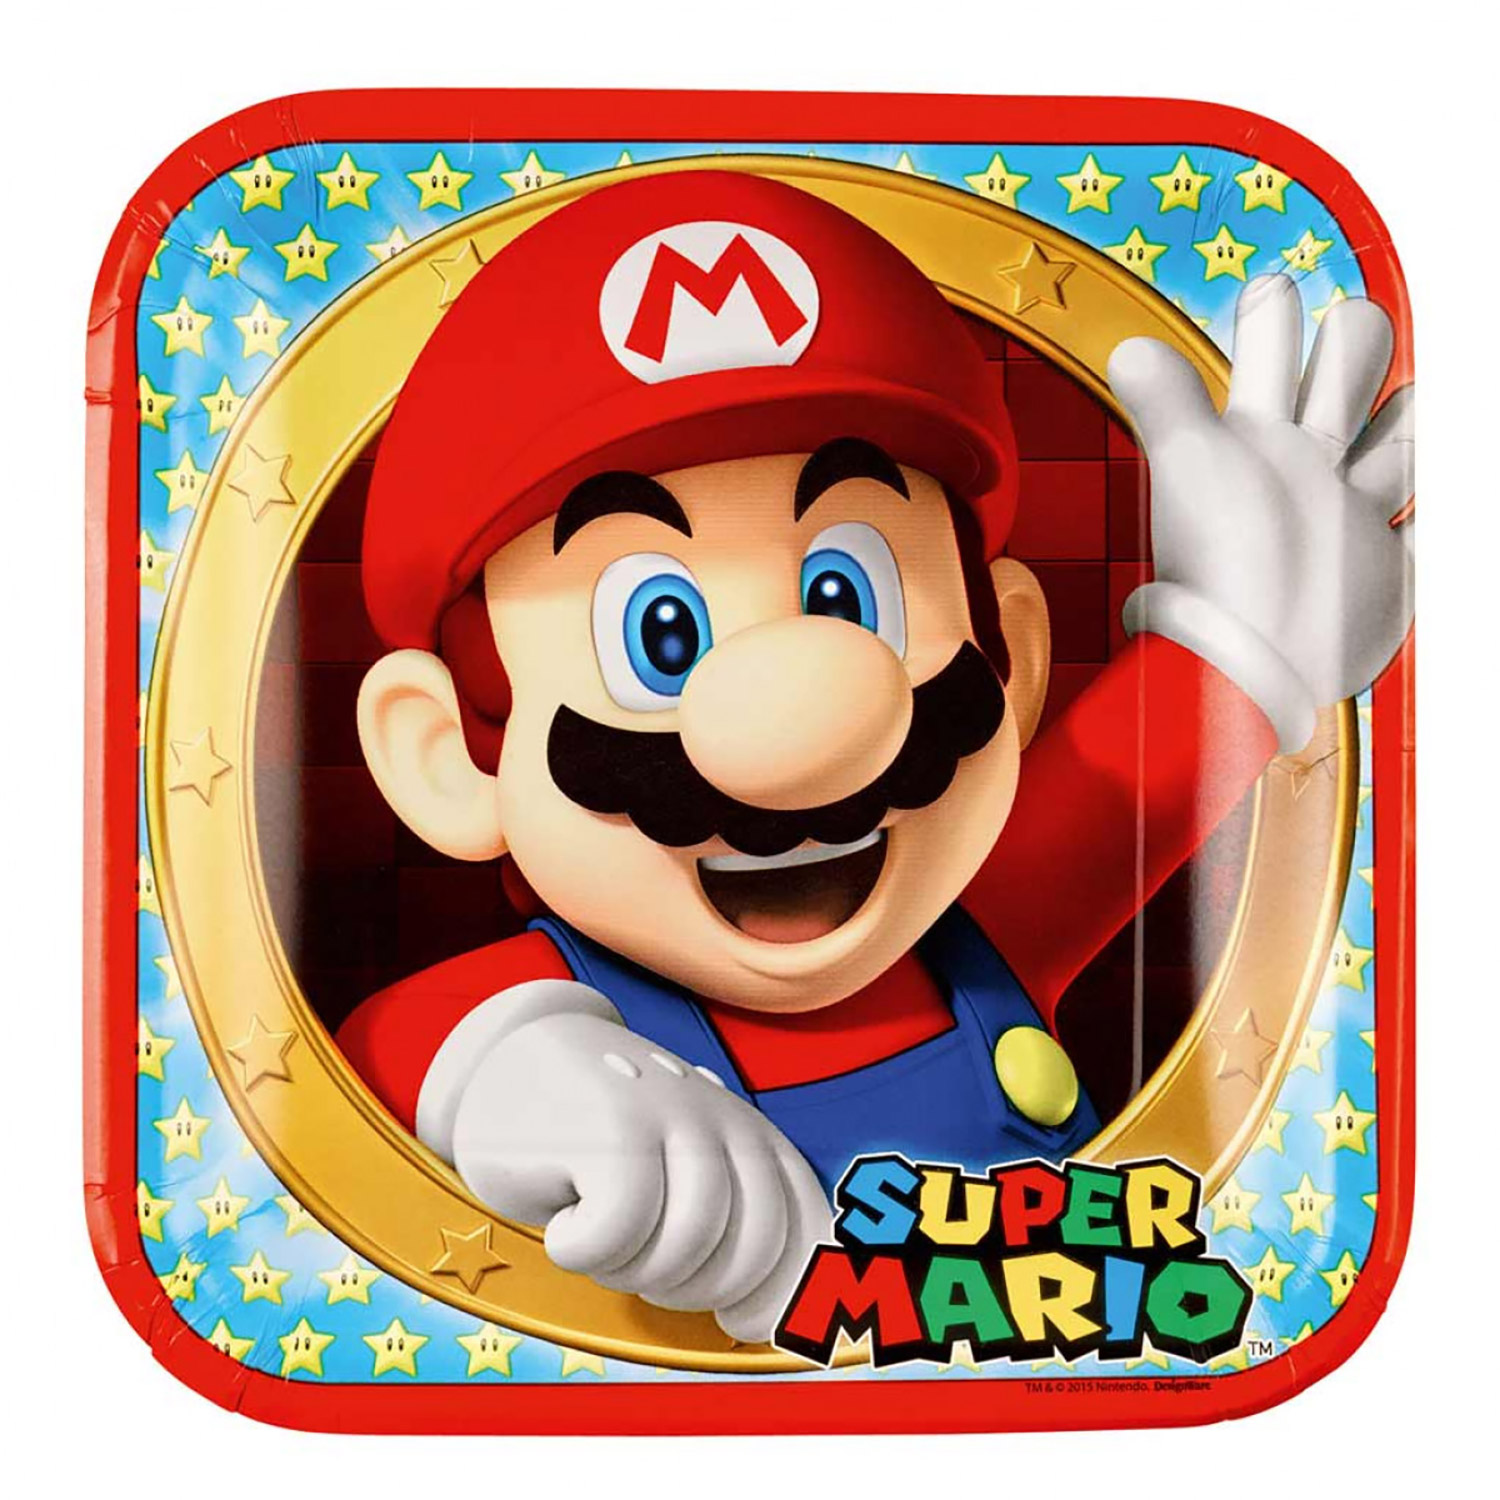 Assiettes carrées : Super Mario Bross